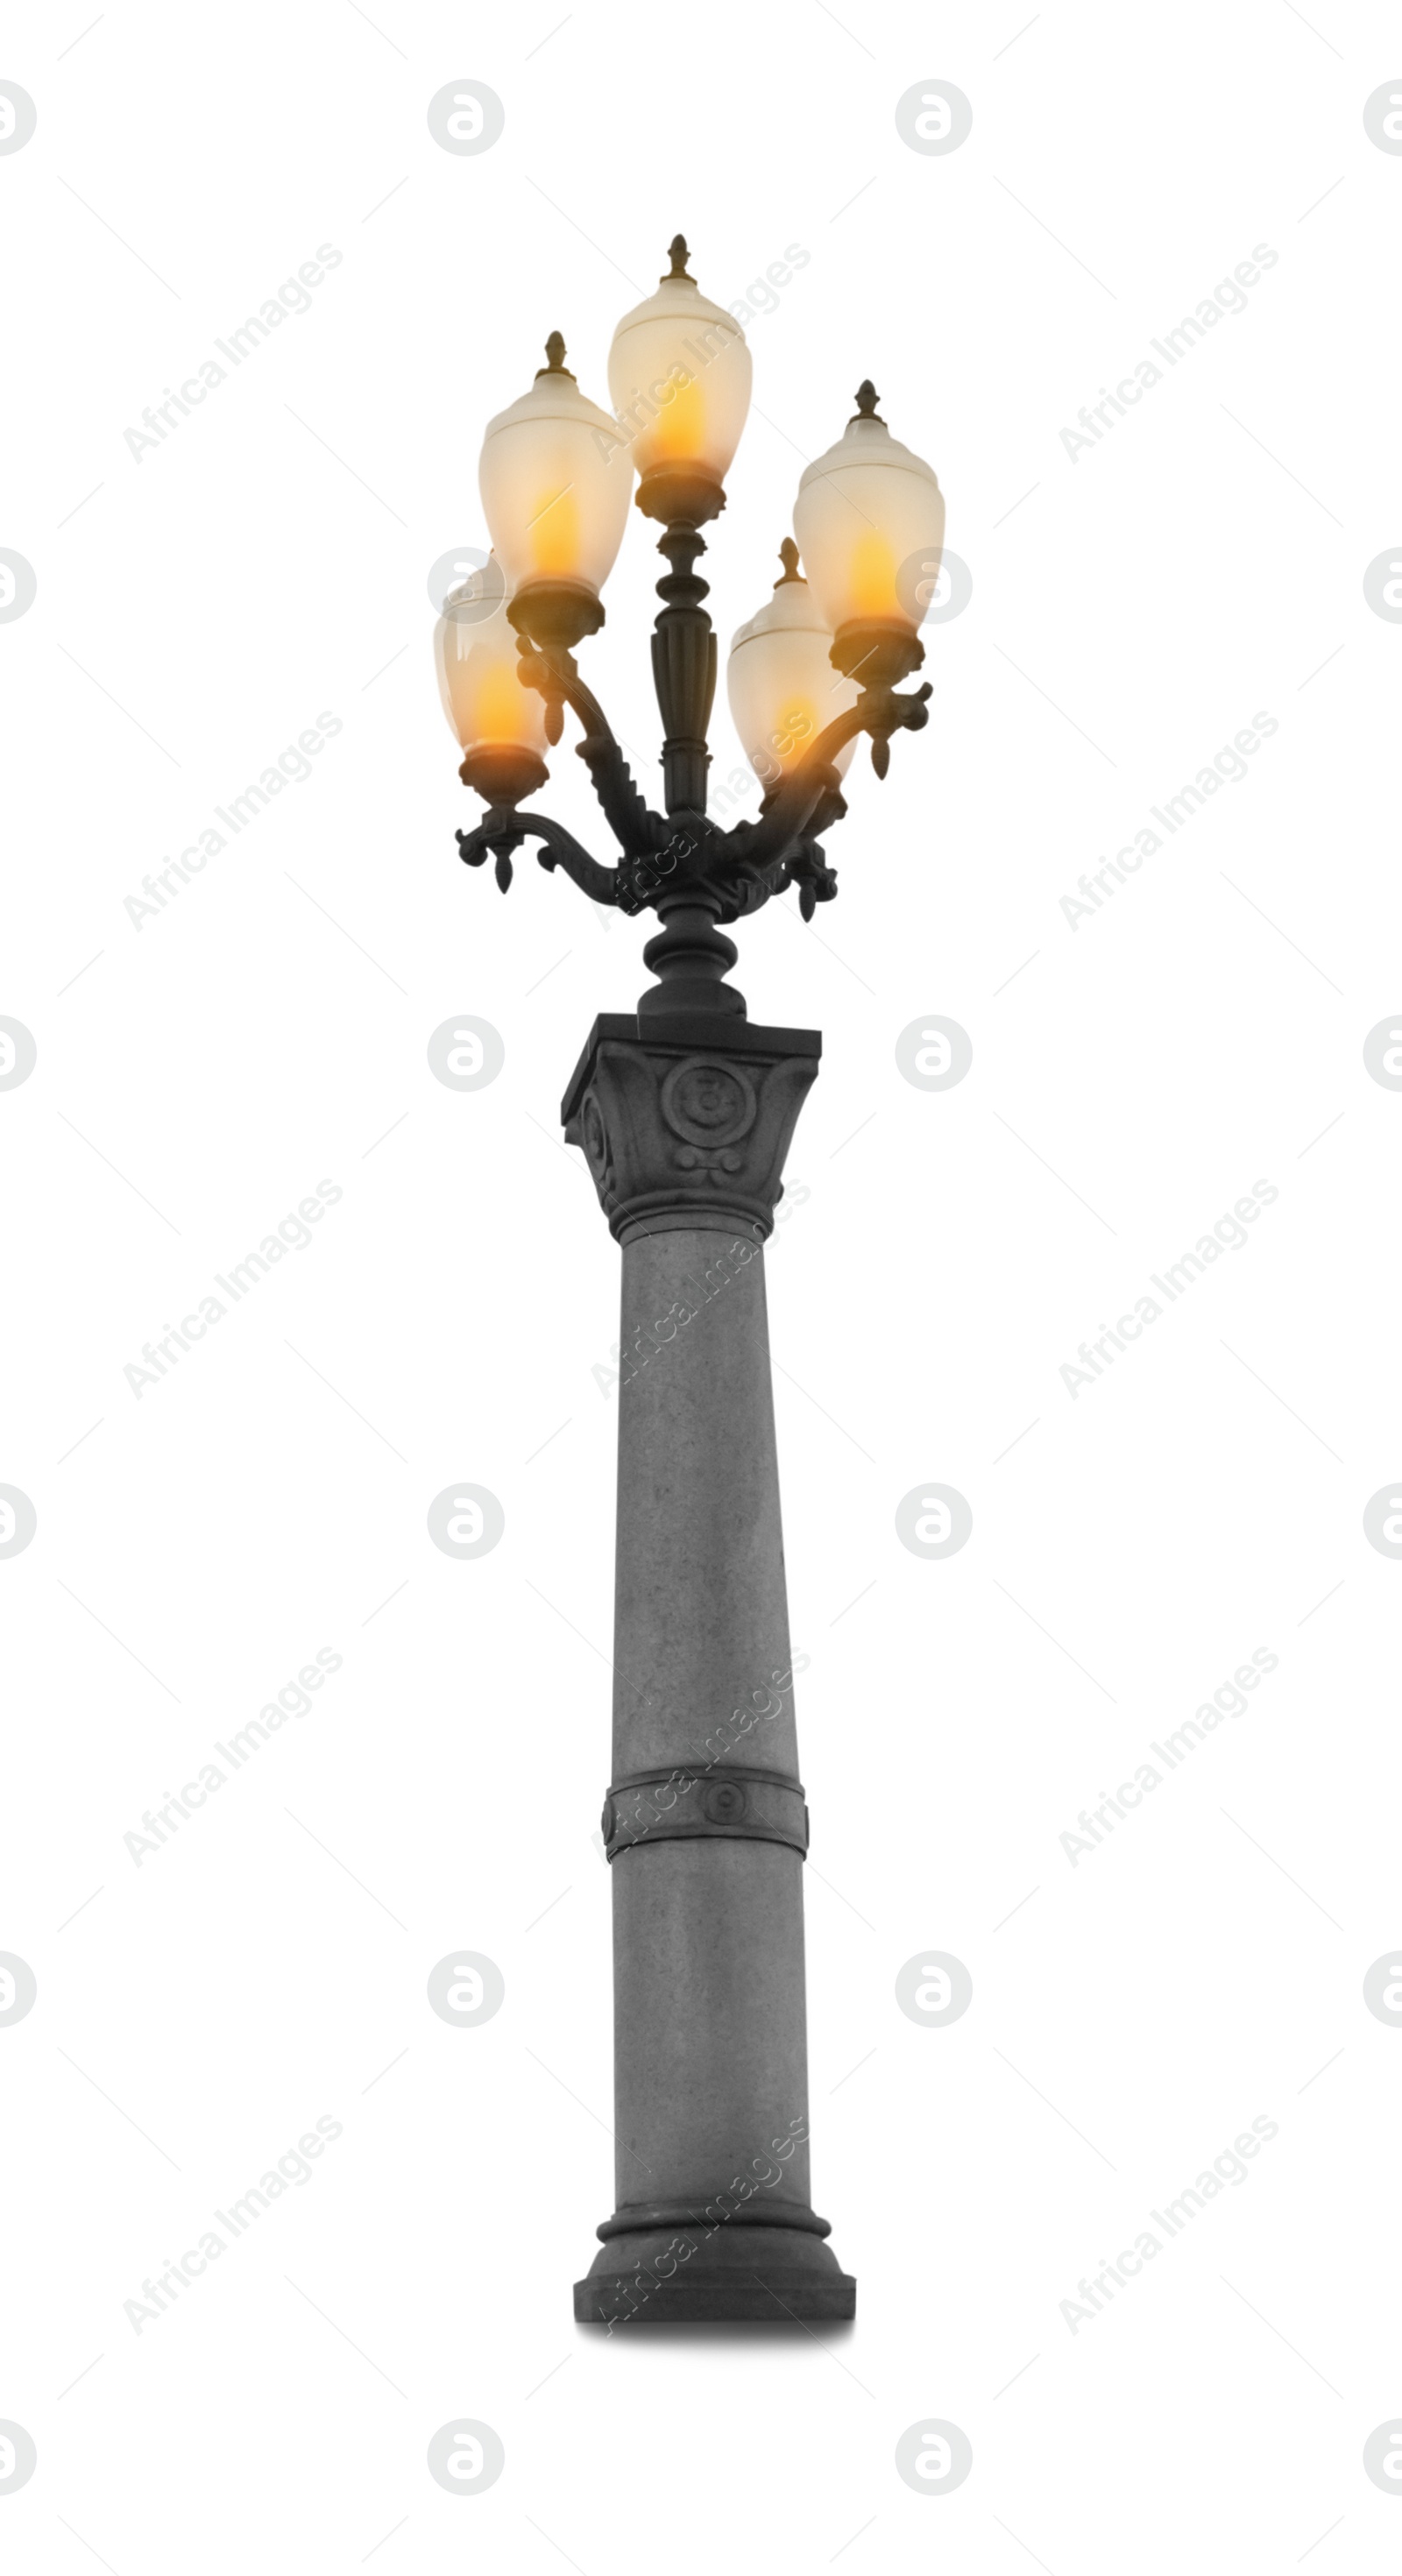 Image of Beautiful old fashioned street lamp lighting on white background